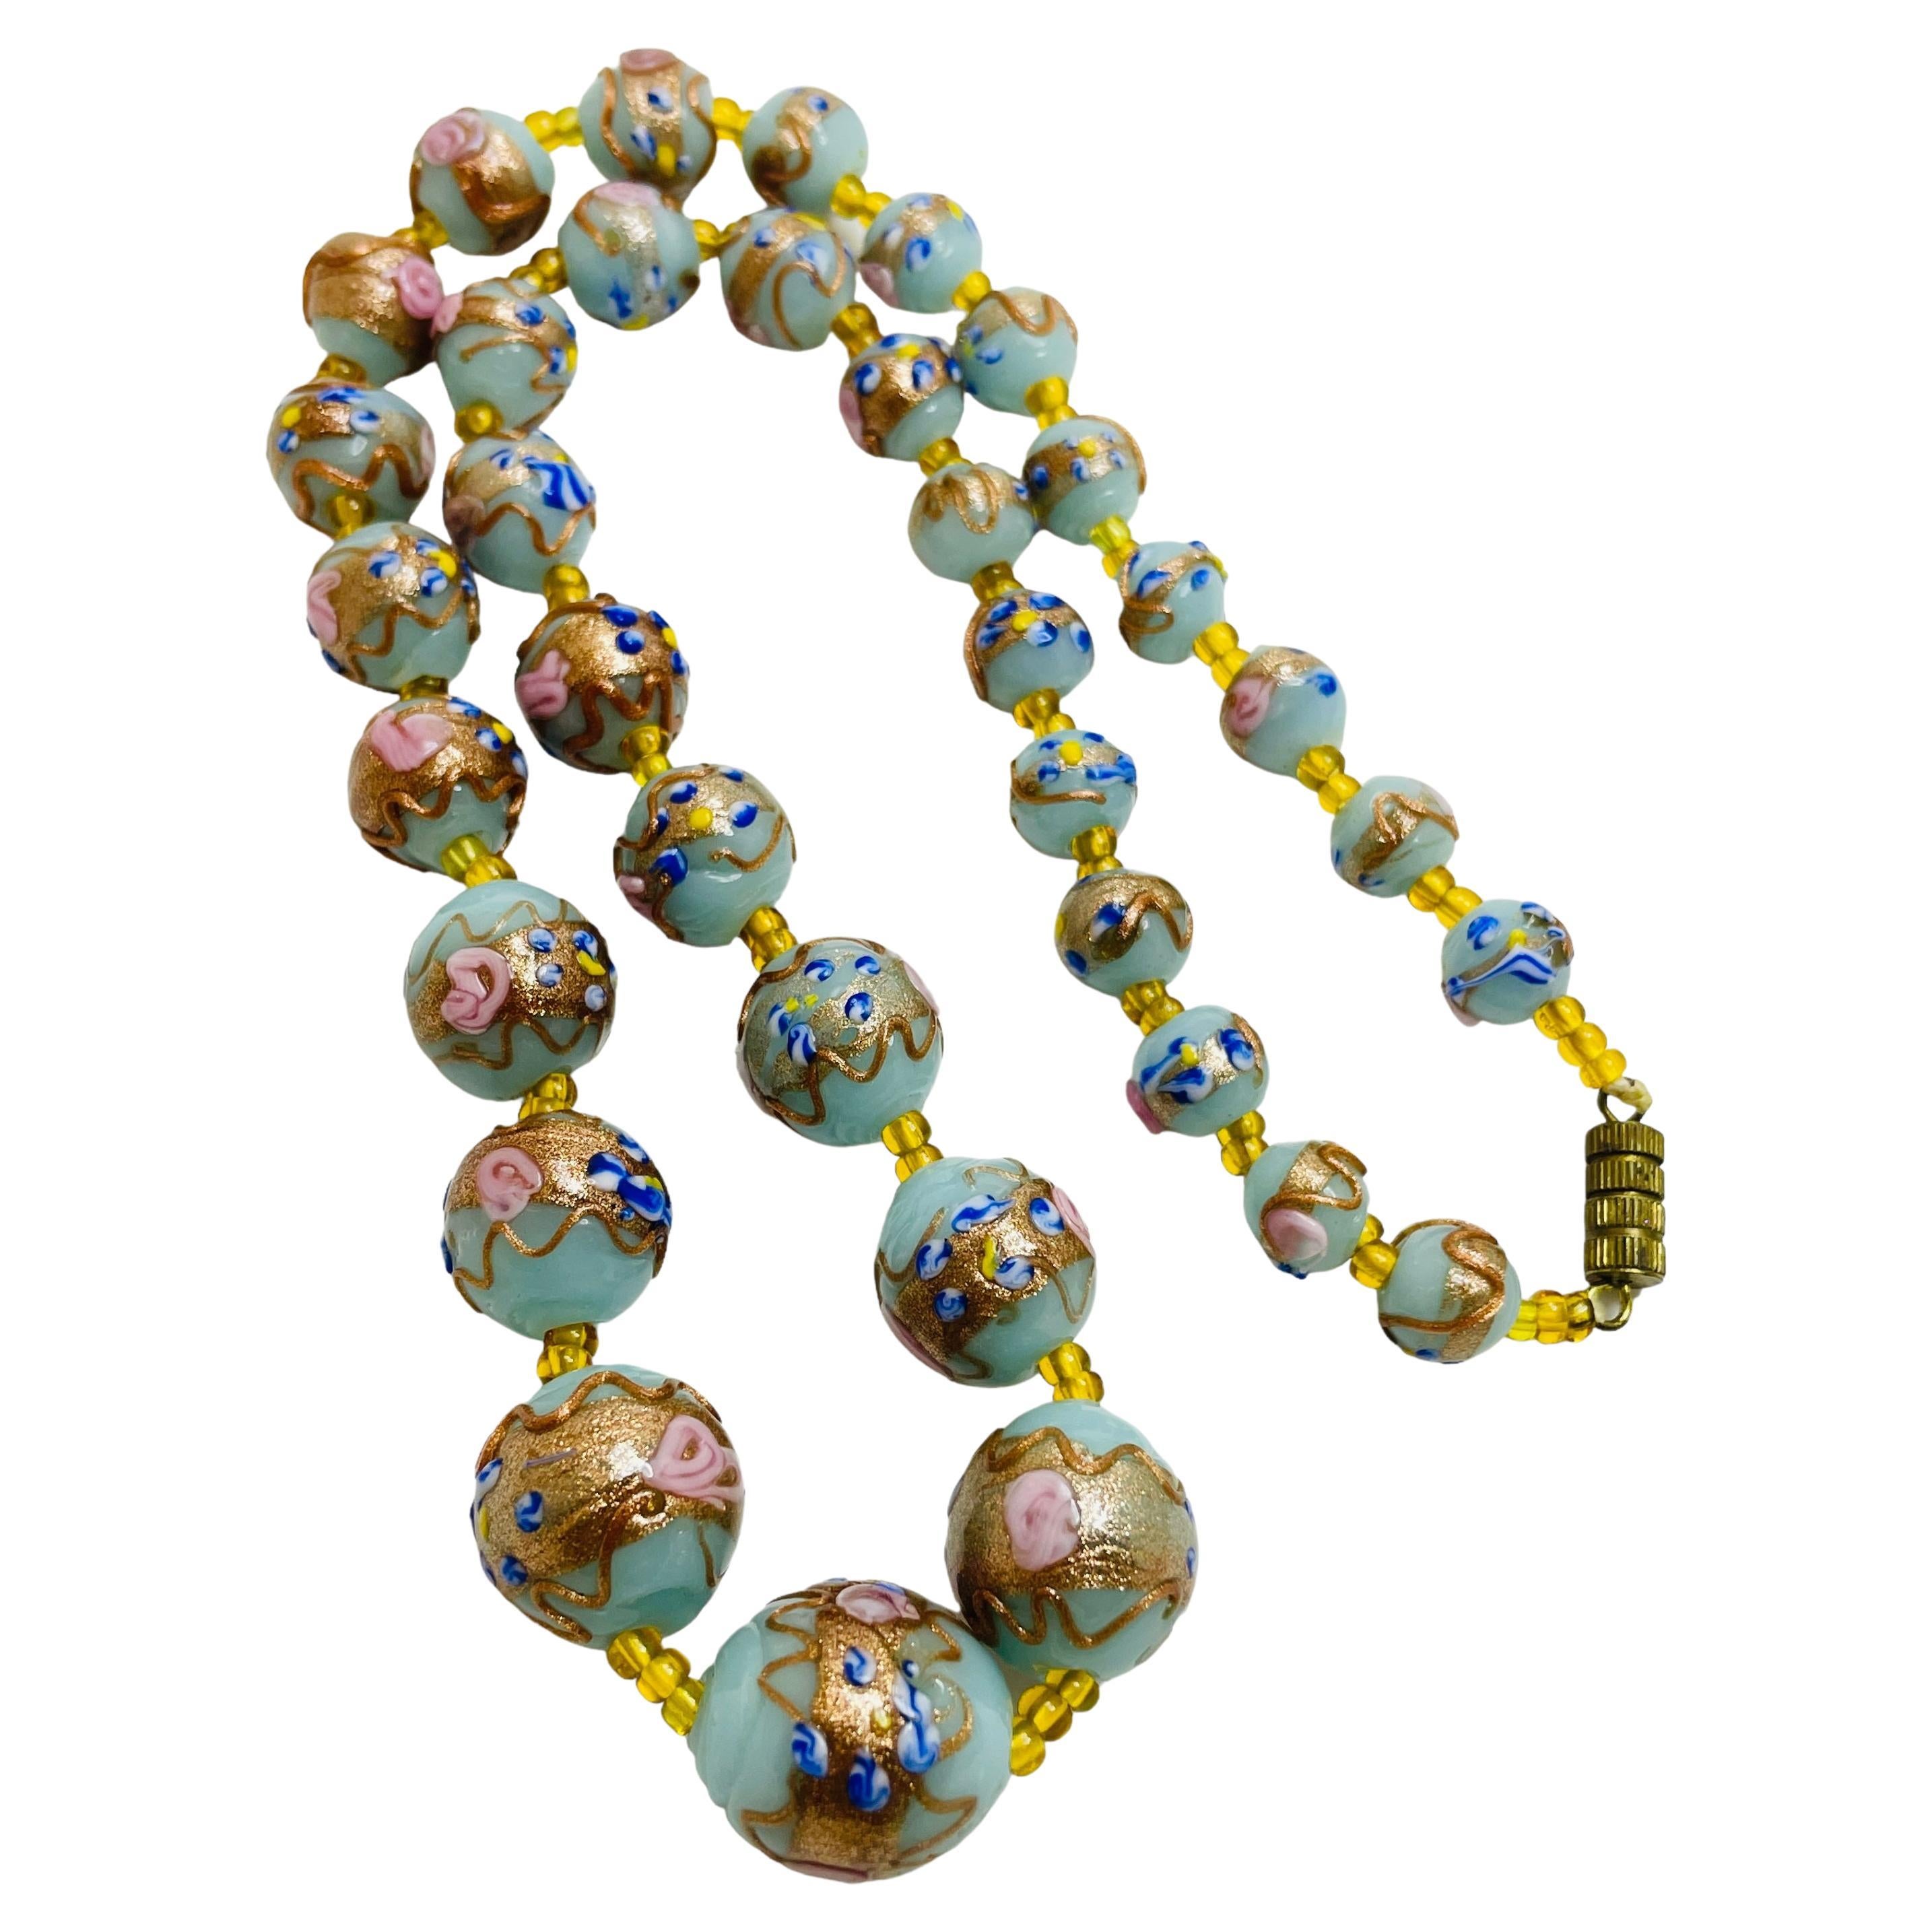 Necklaces at Auction